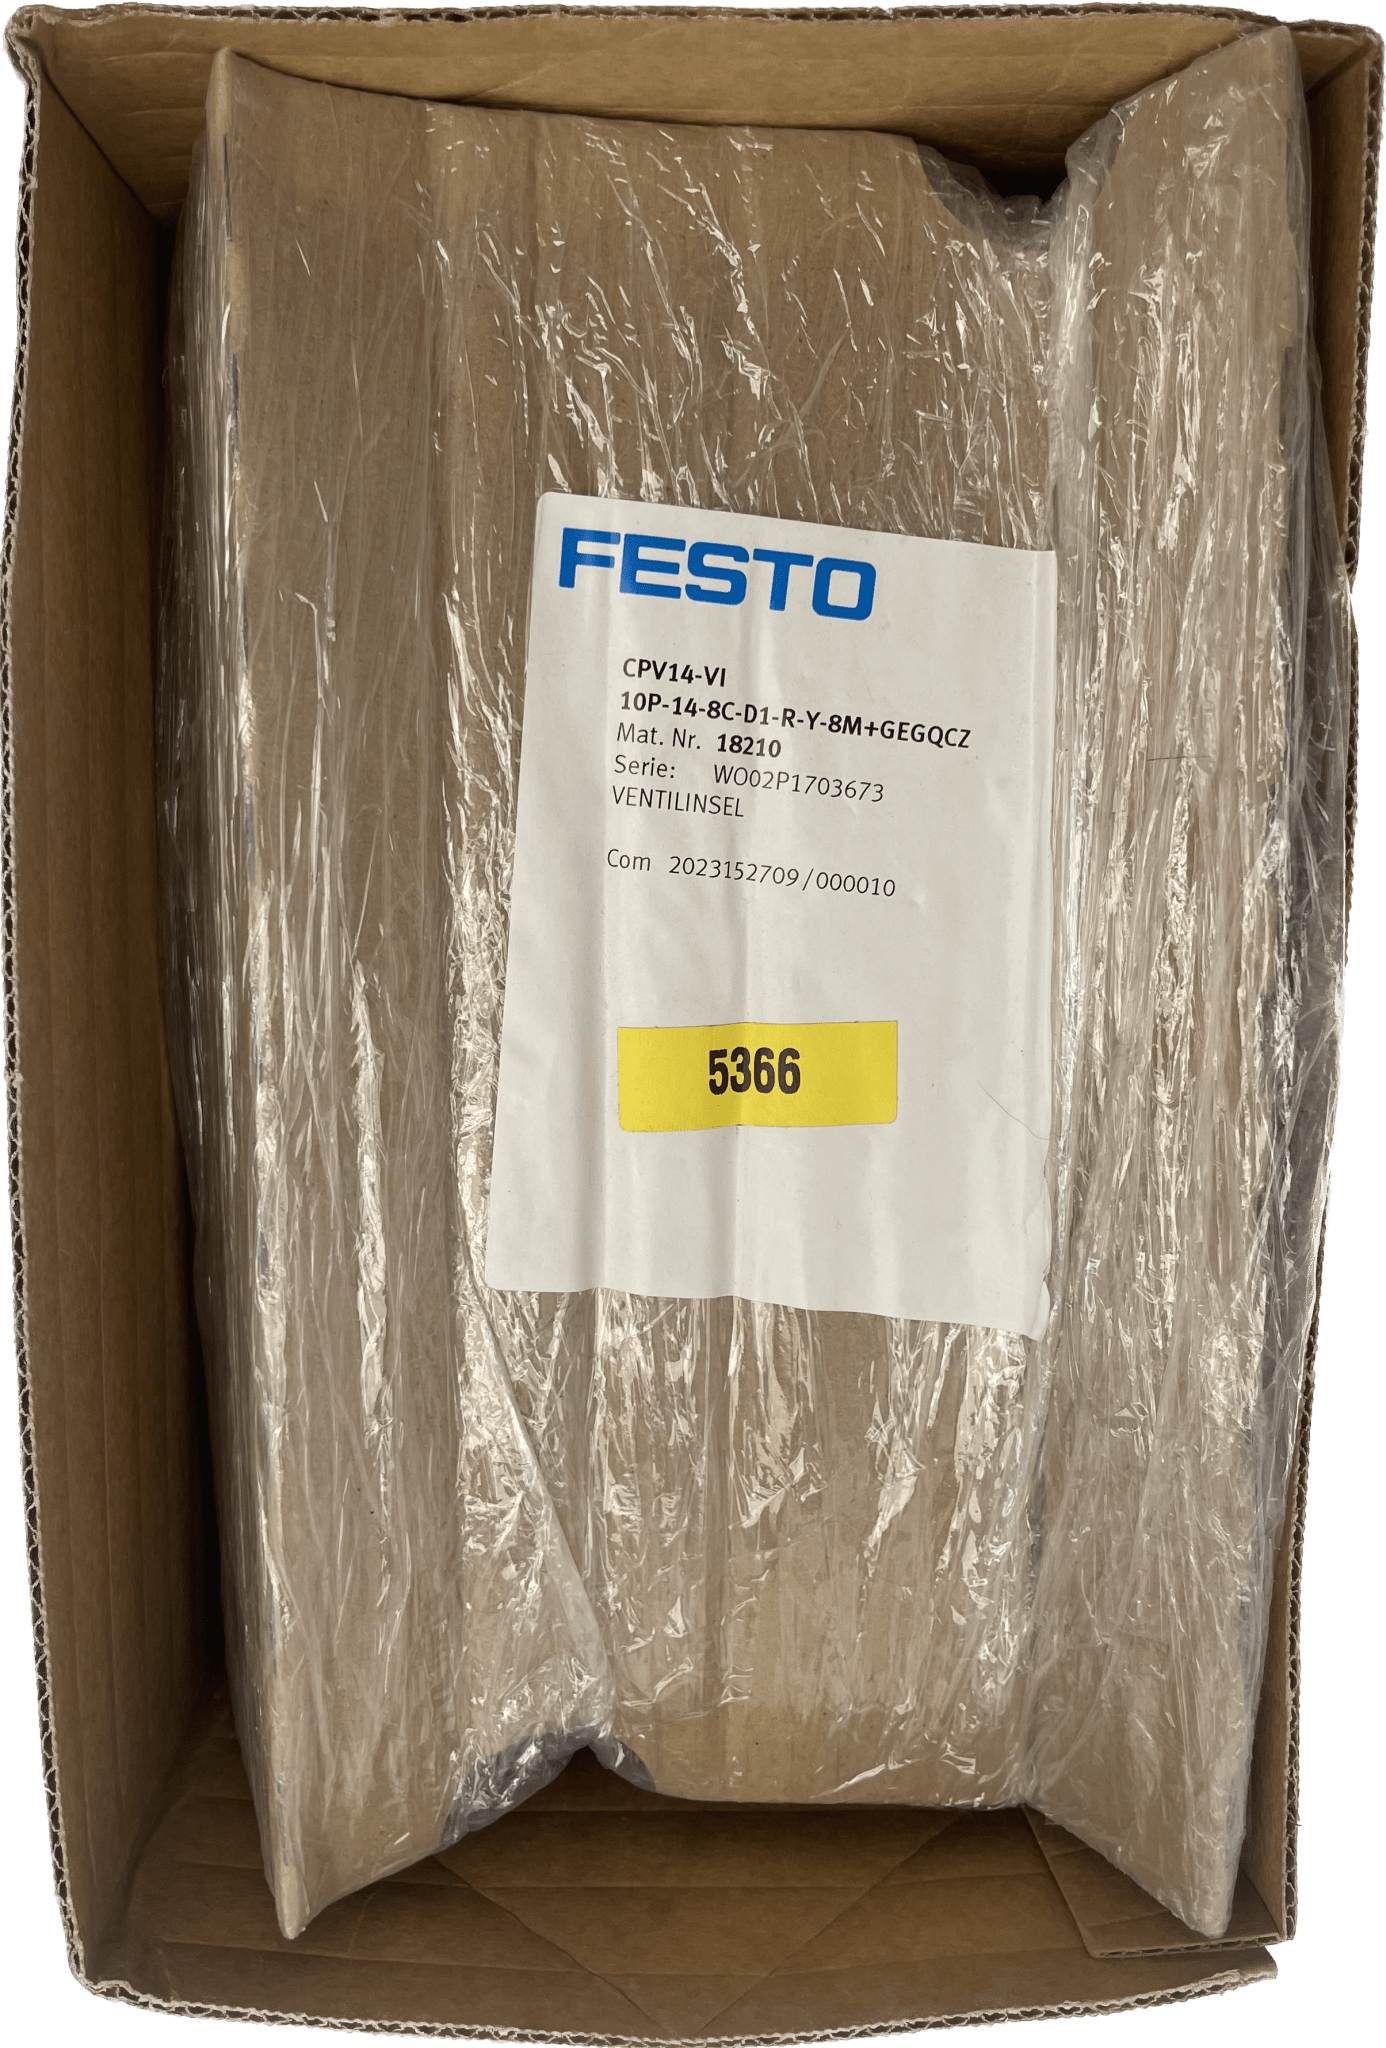 Festo Ventilinsel CPV14-VI / 10P-14-8C-D1-R-Y-8M+GEGQCZ - #product_category# | Klenk Maschinenhandel